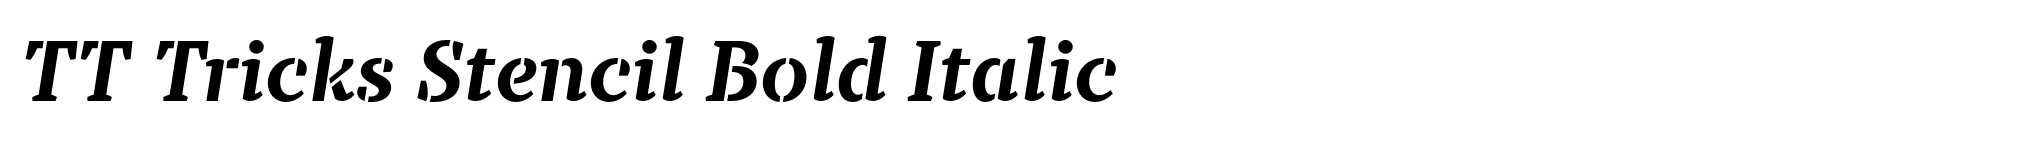 TT Tricks Stencil Bold Italic image